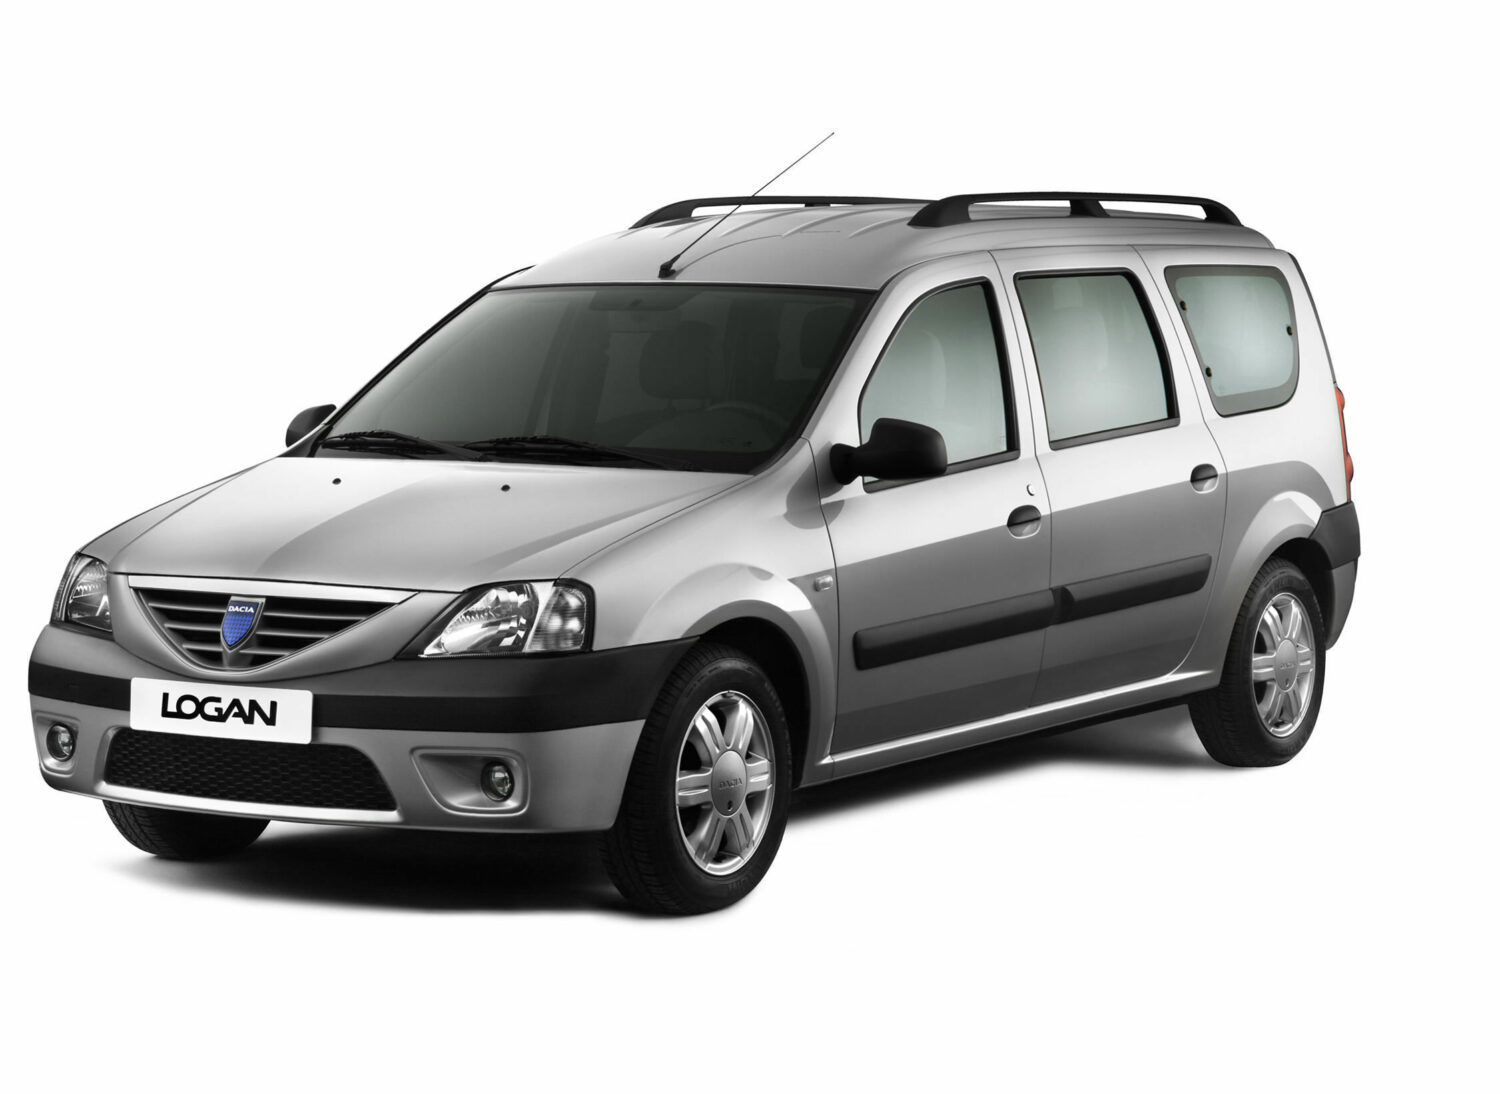 2006 - Dacia LOGAN MCV.jpg